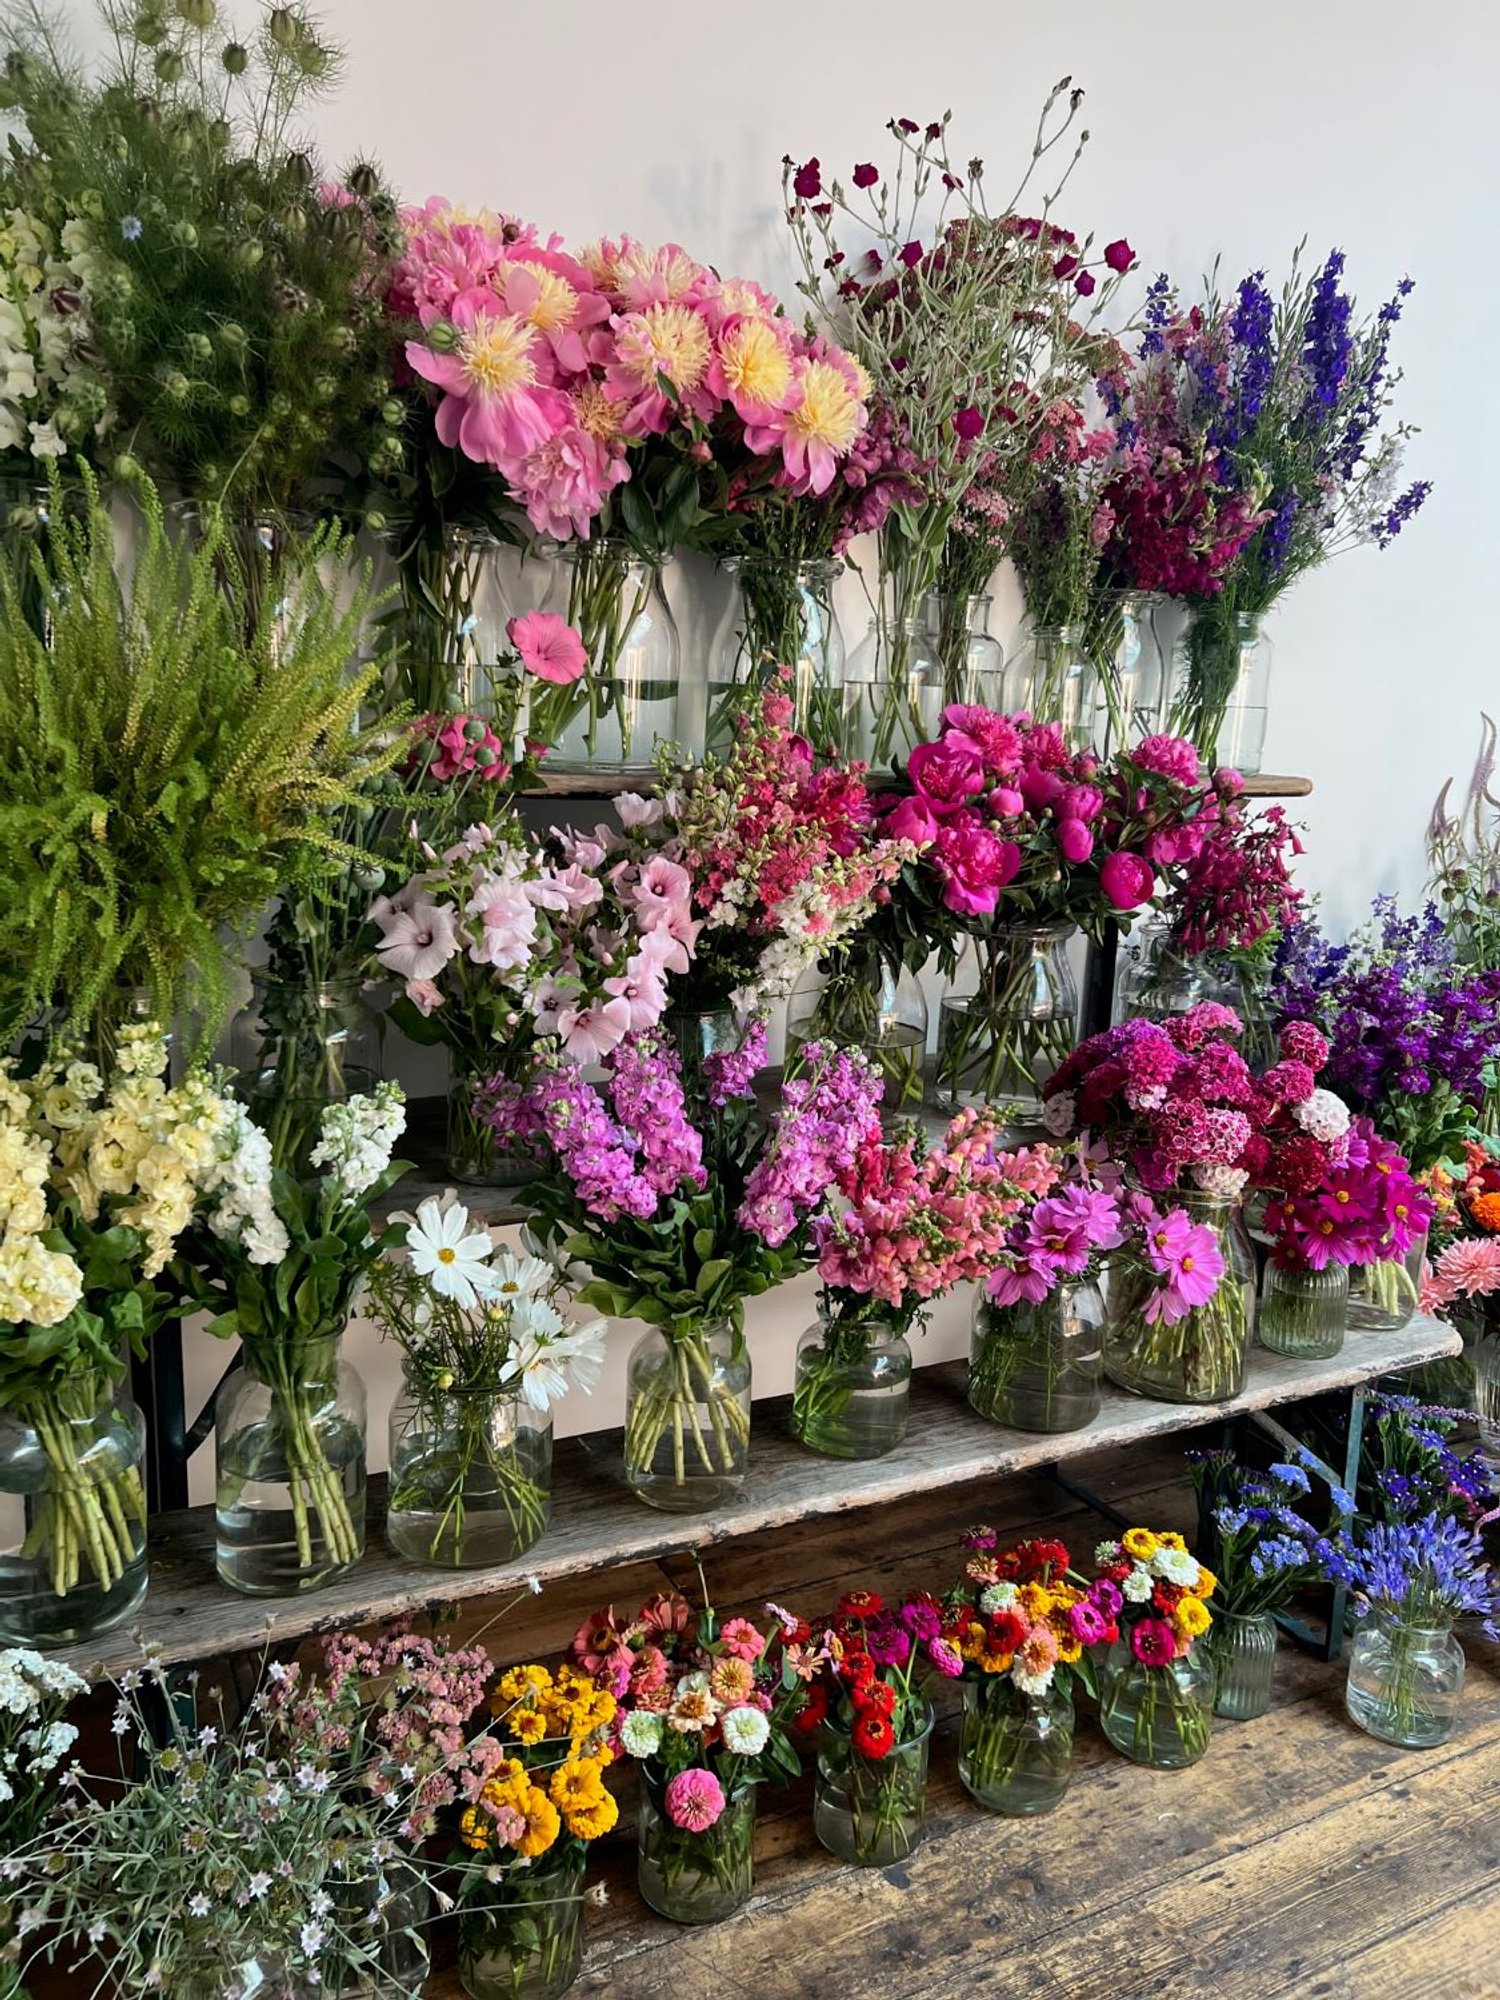 Abundant colourful stand full of British flowers